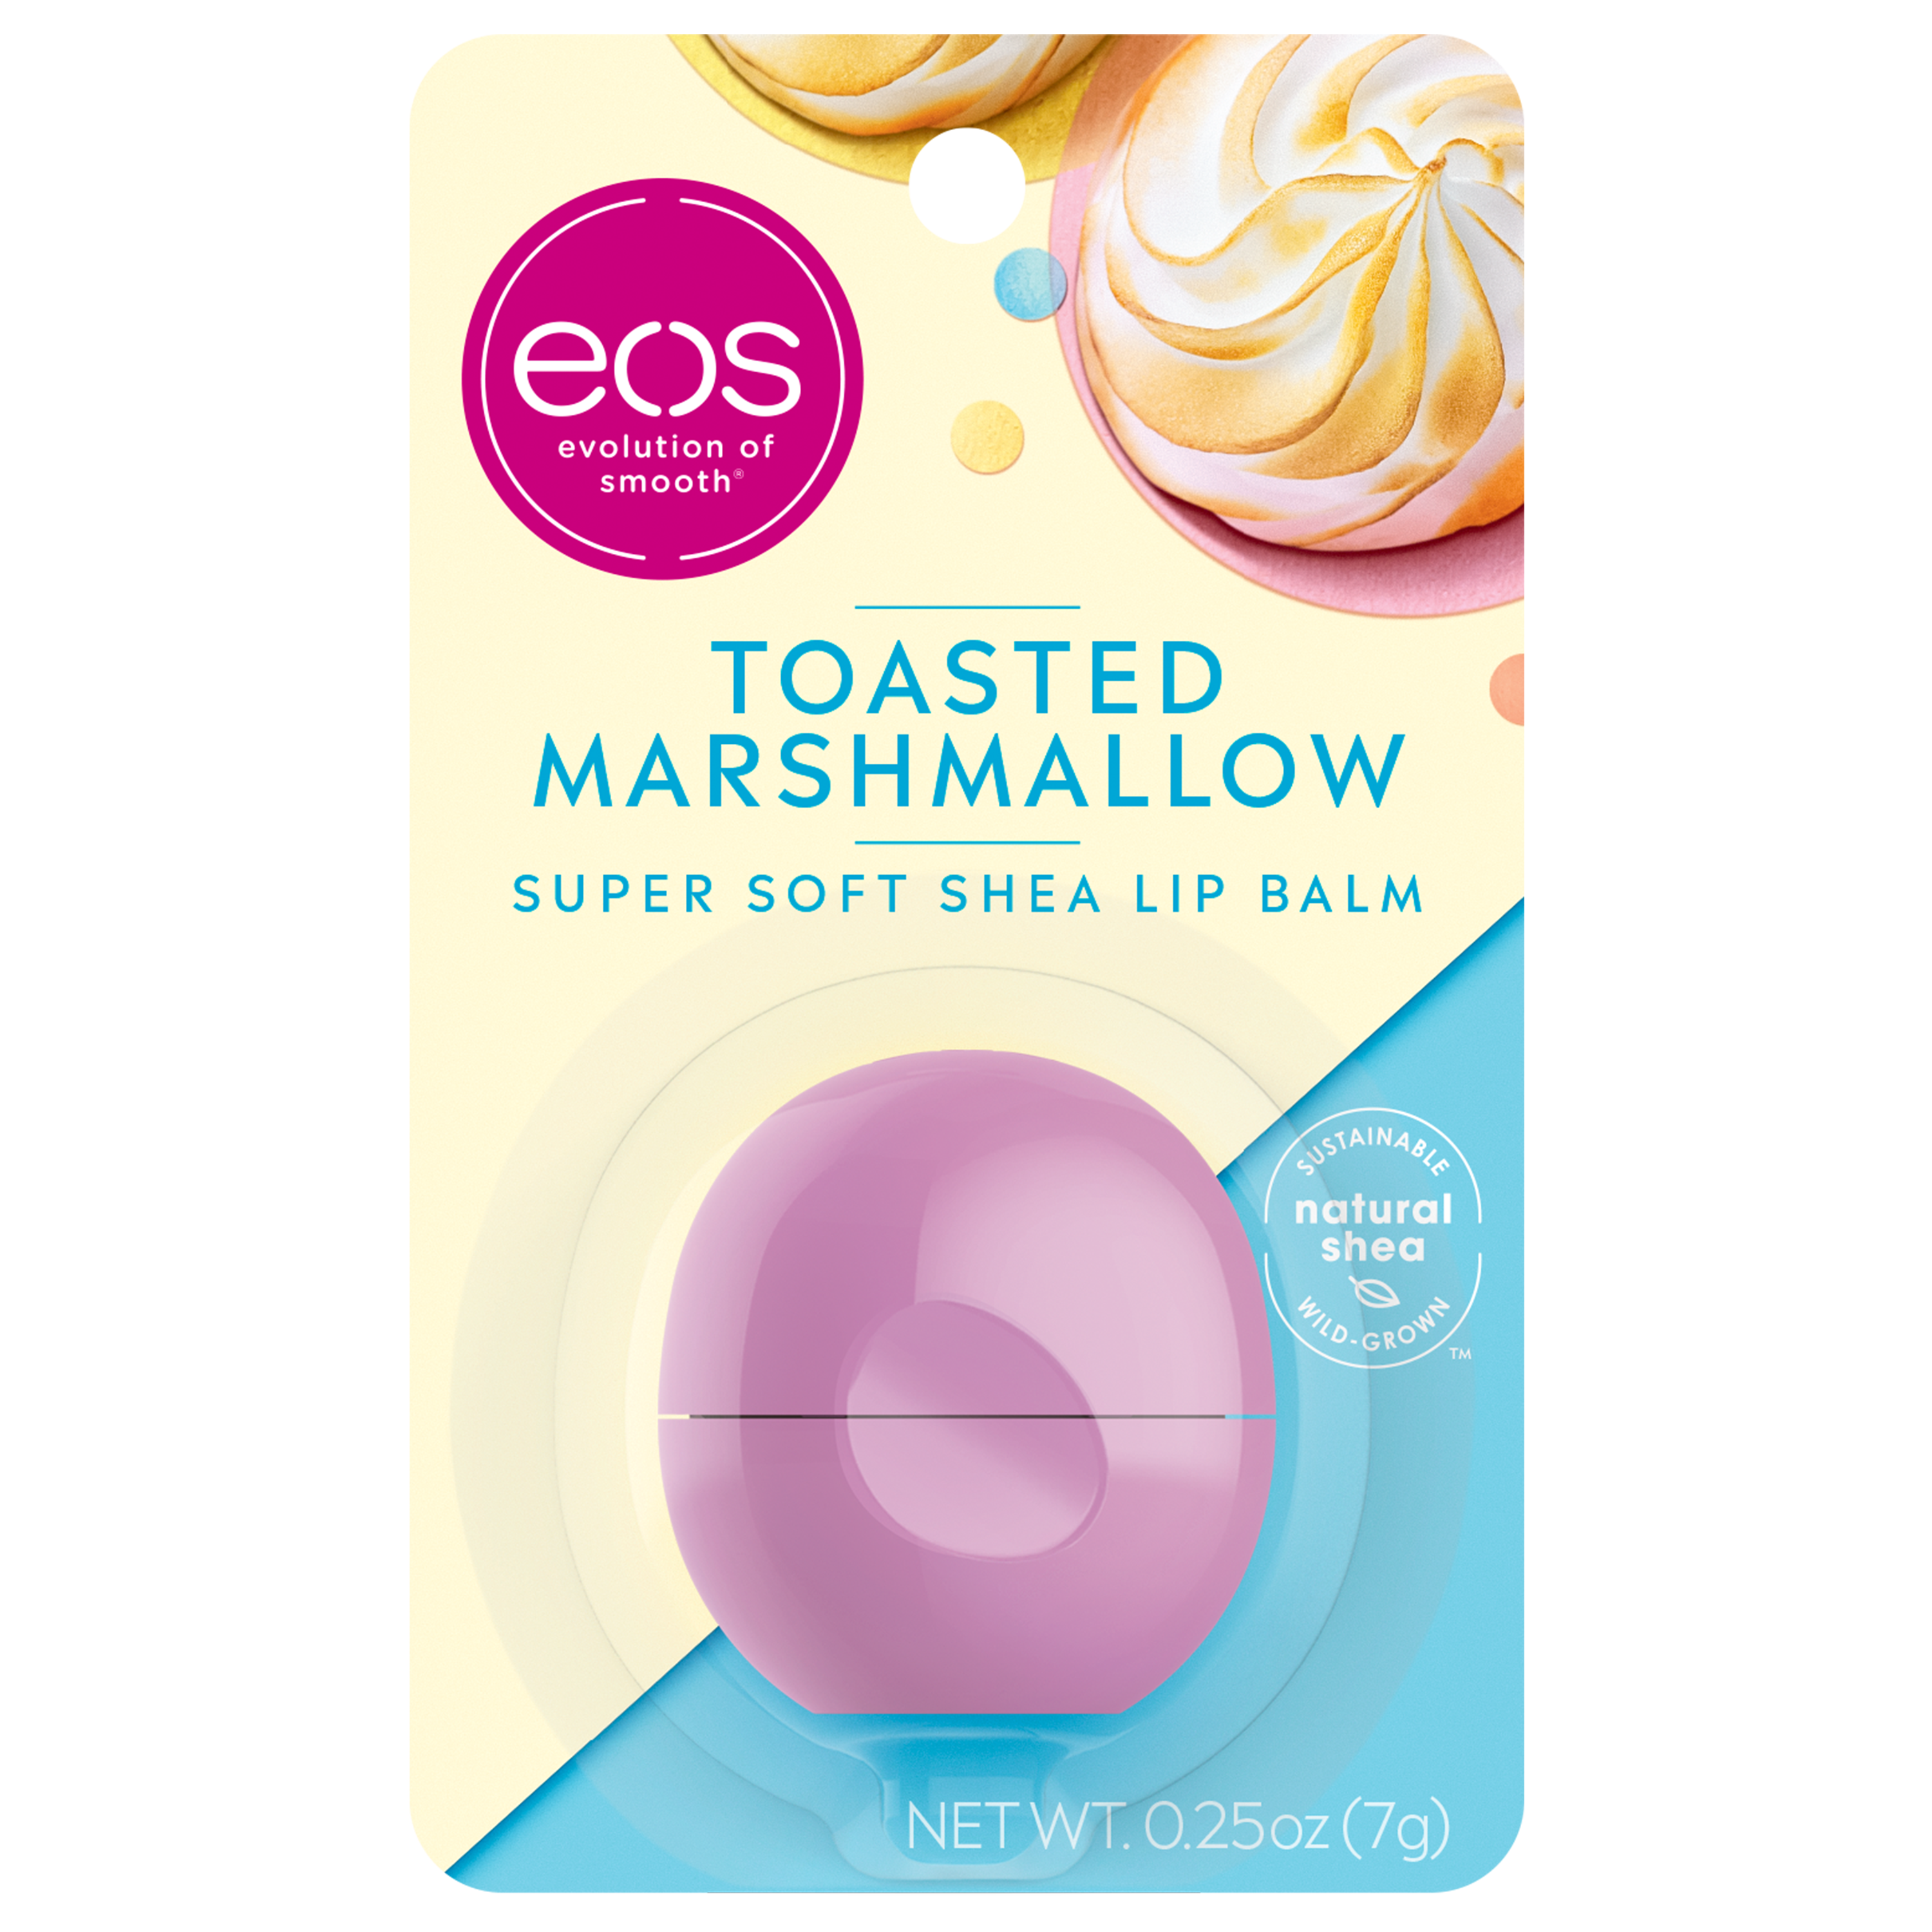 eos Super Soft Shea Lip Balm Sphere - Toasted Marshmallow | 0.25 oz - image 1 of 7